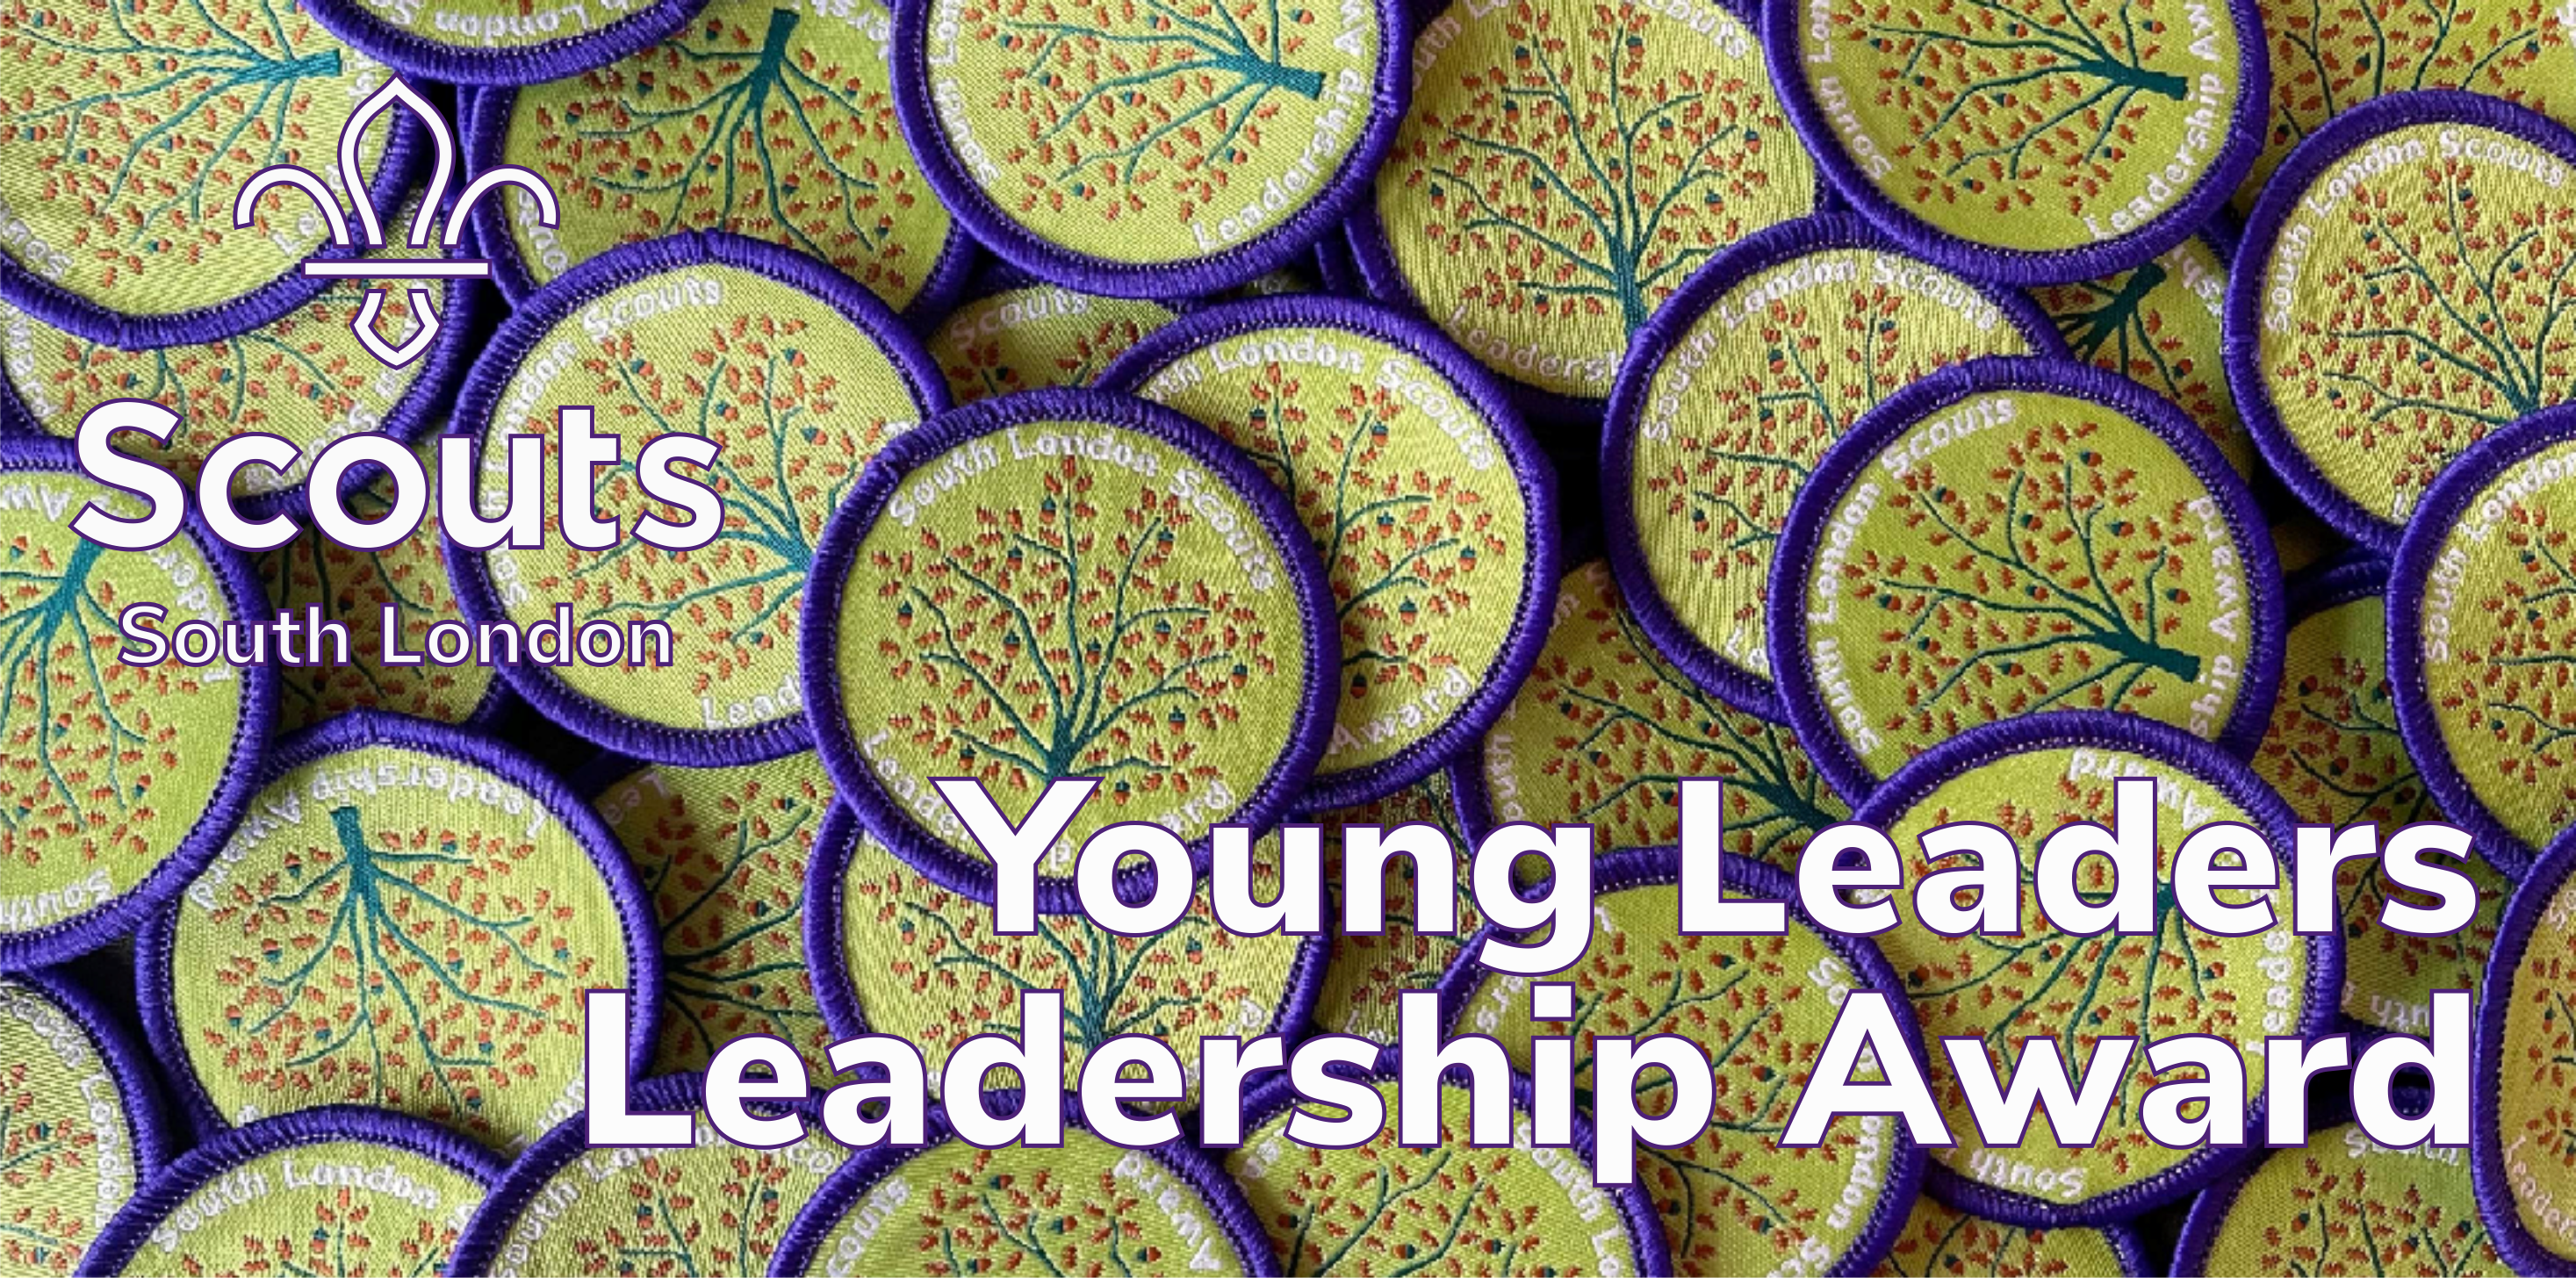 Young Leaders Leadership Award 